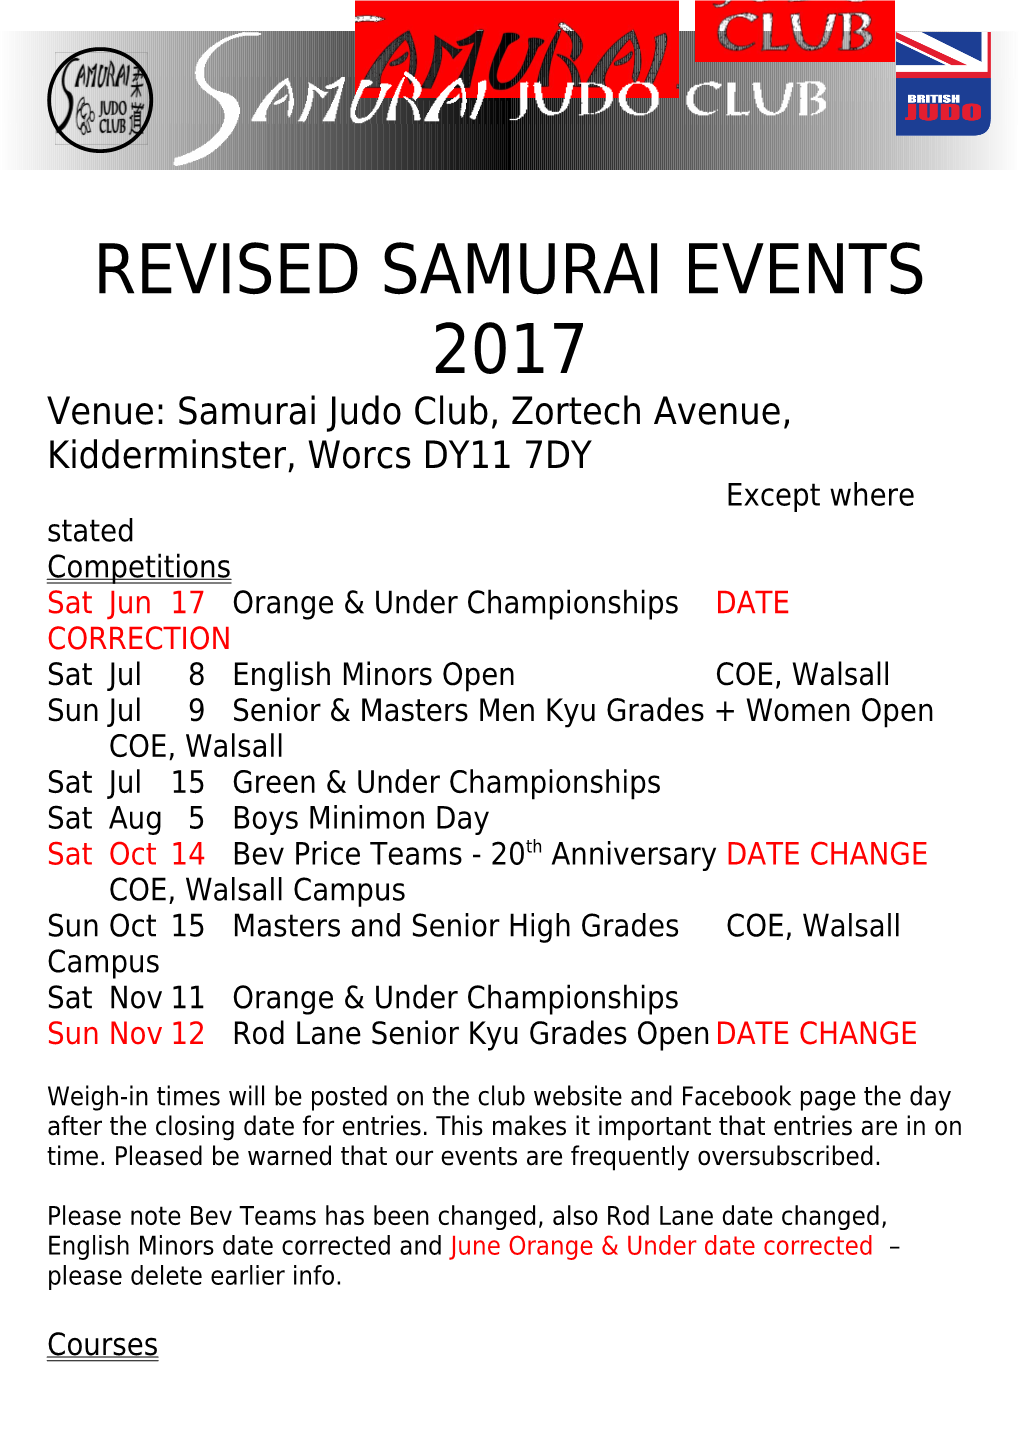 Venue: Samurai Judo Club, Zortech Avenue, Kidderminster, Worcs DY11 7DY